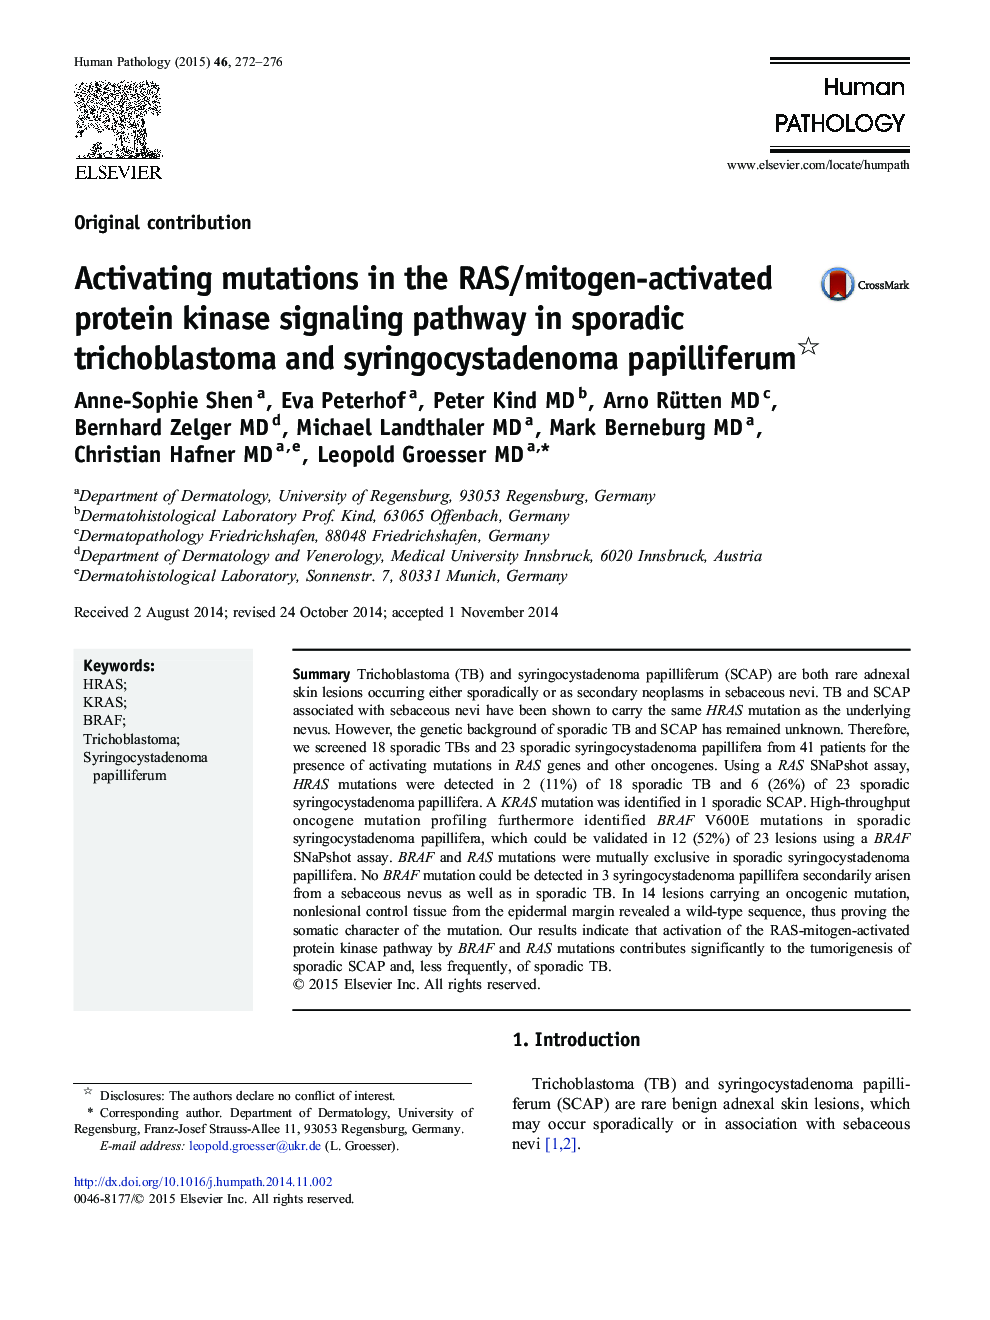 Activating mutations in the RAS/mitogen-activated protein kinase signaling pathway in sporadic trichoblastoma and syringocystadenoma papilliferum 